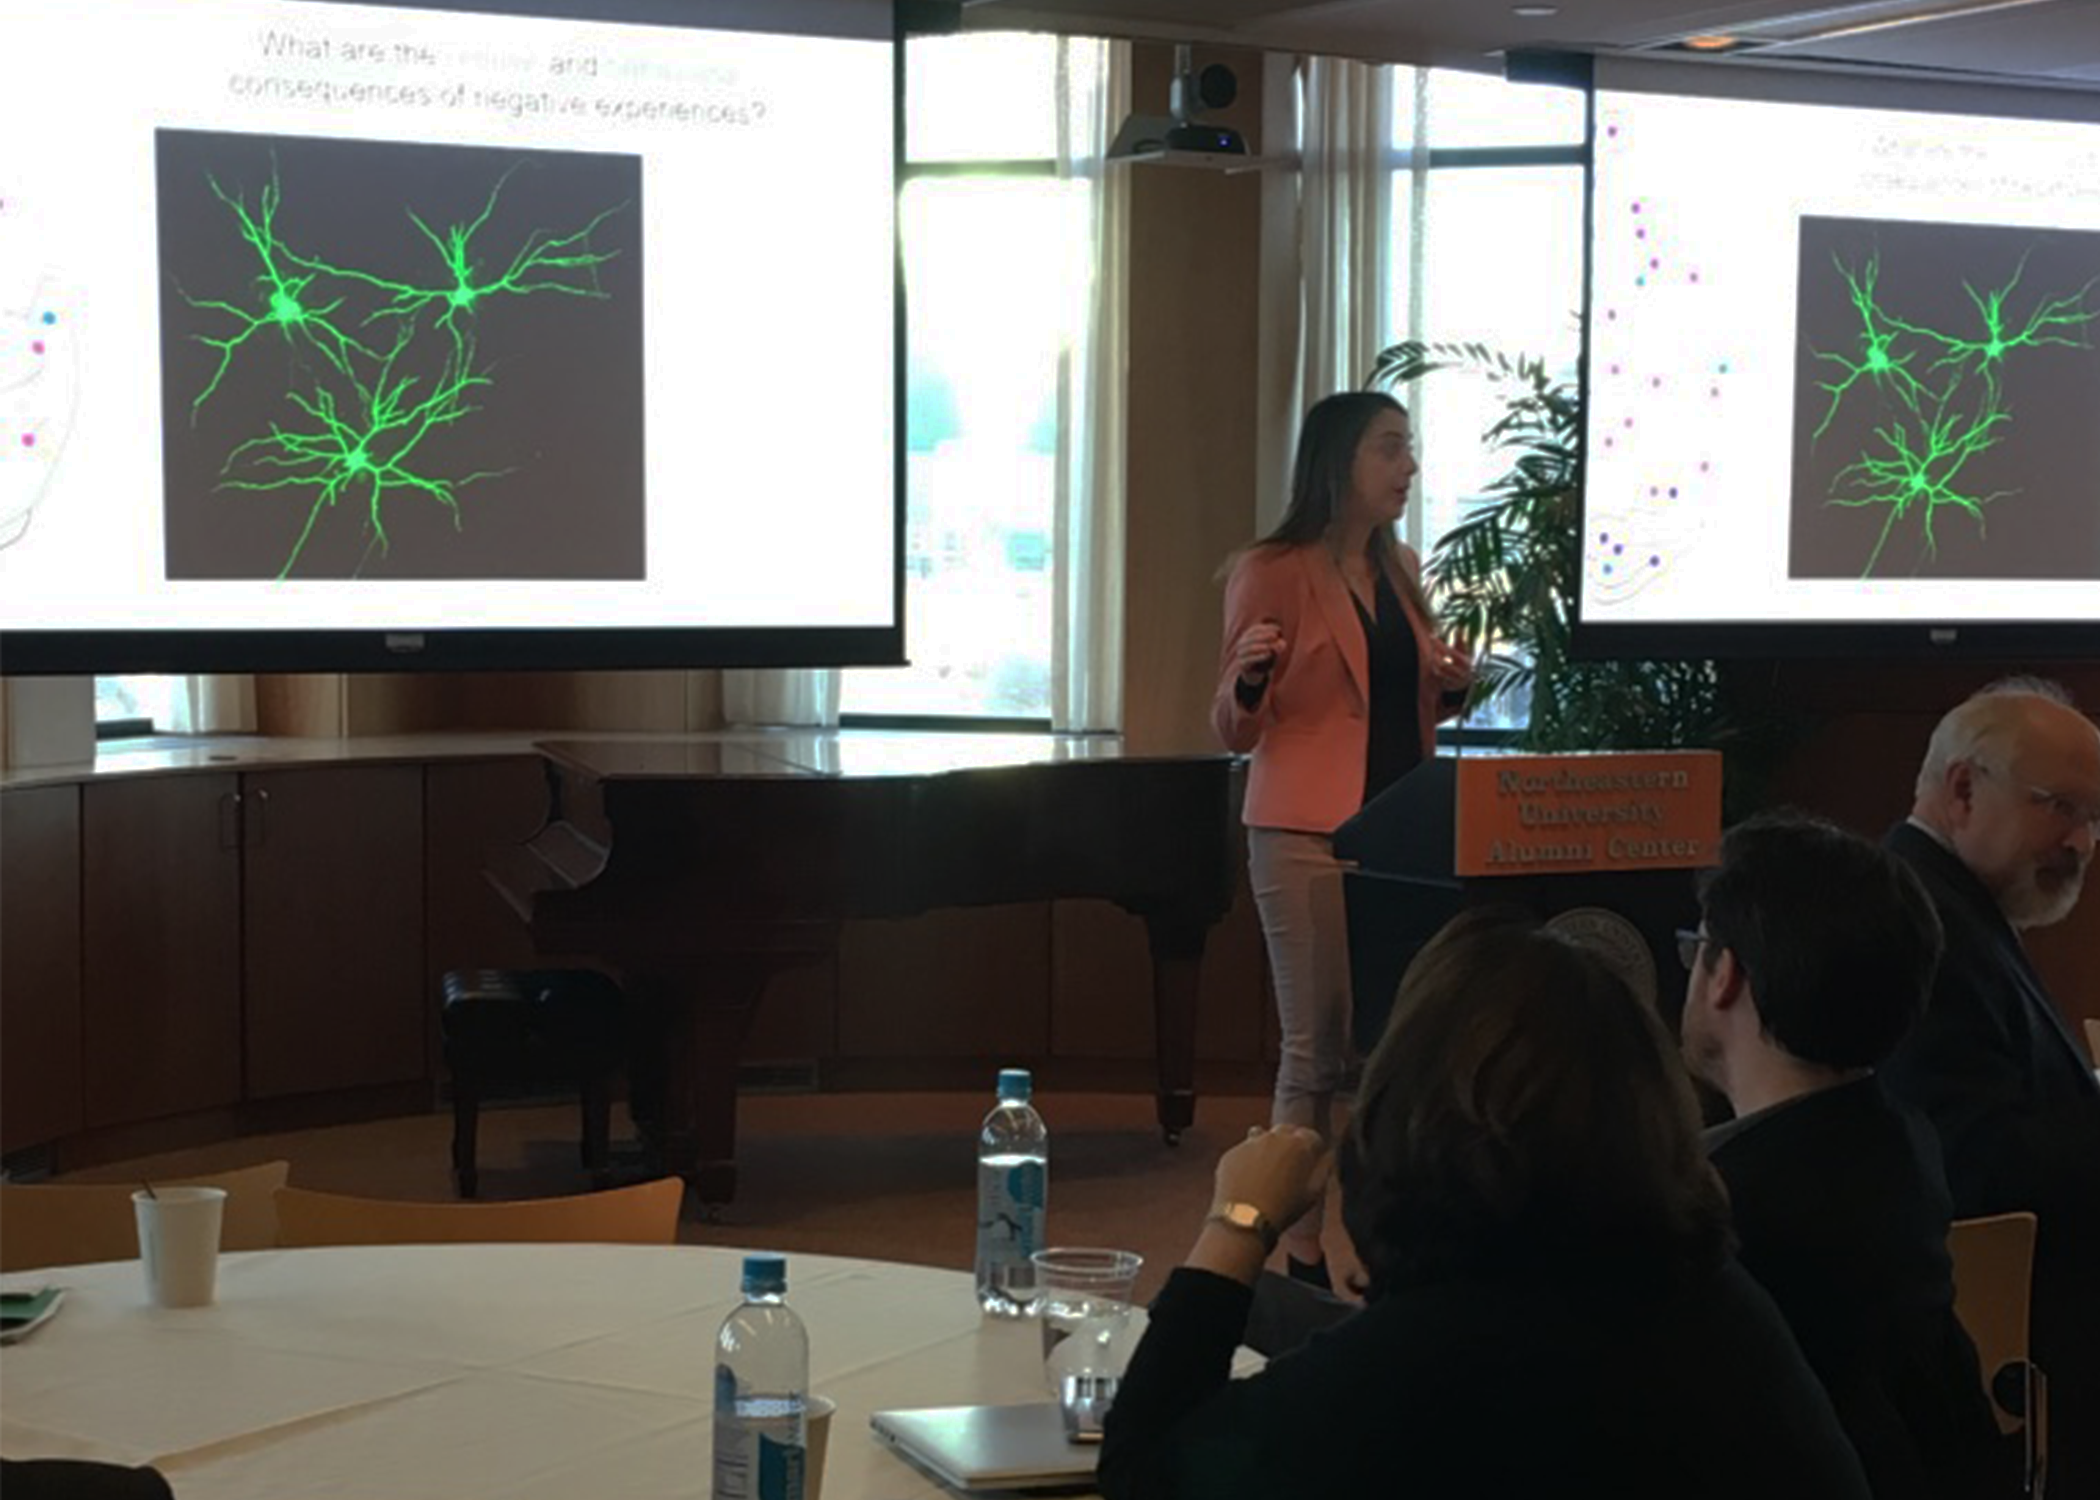 Rebecca Shansky presenting at the neuroscience talk.